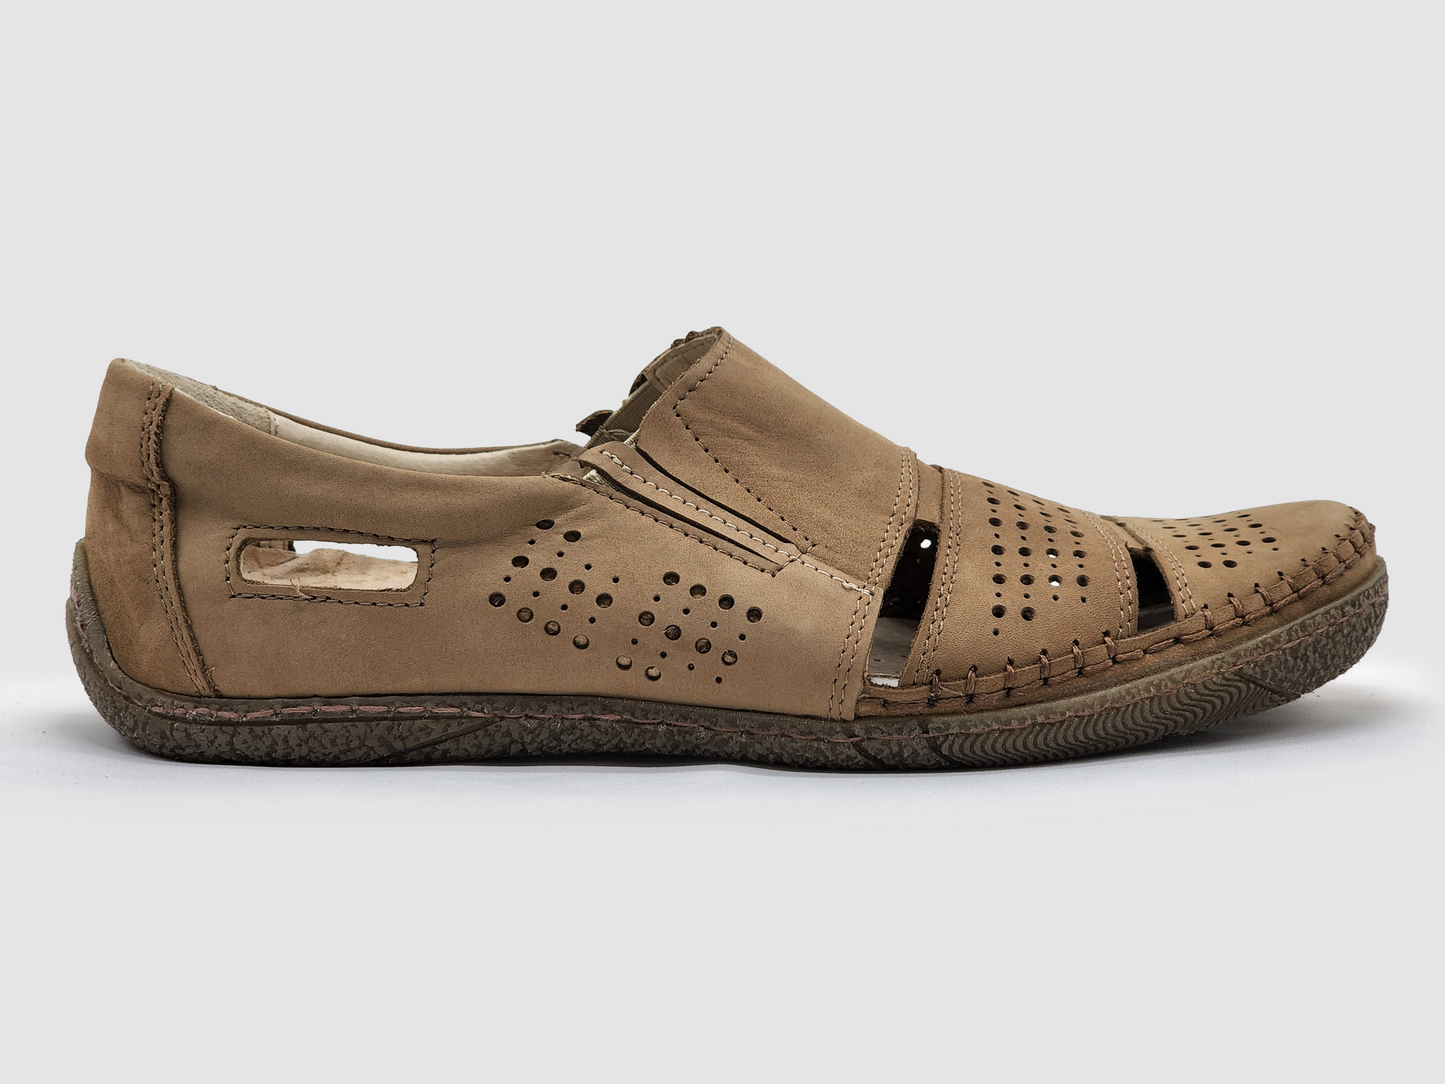 Men's Vacation Leather Sandals - Beige - Kacper Global Shoes 